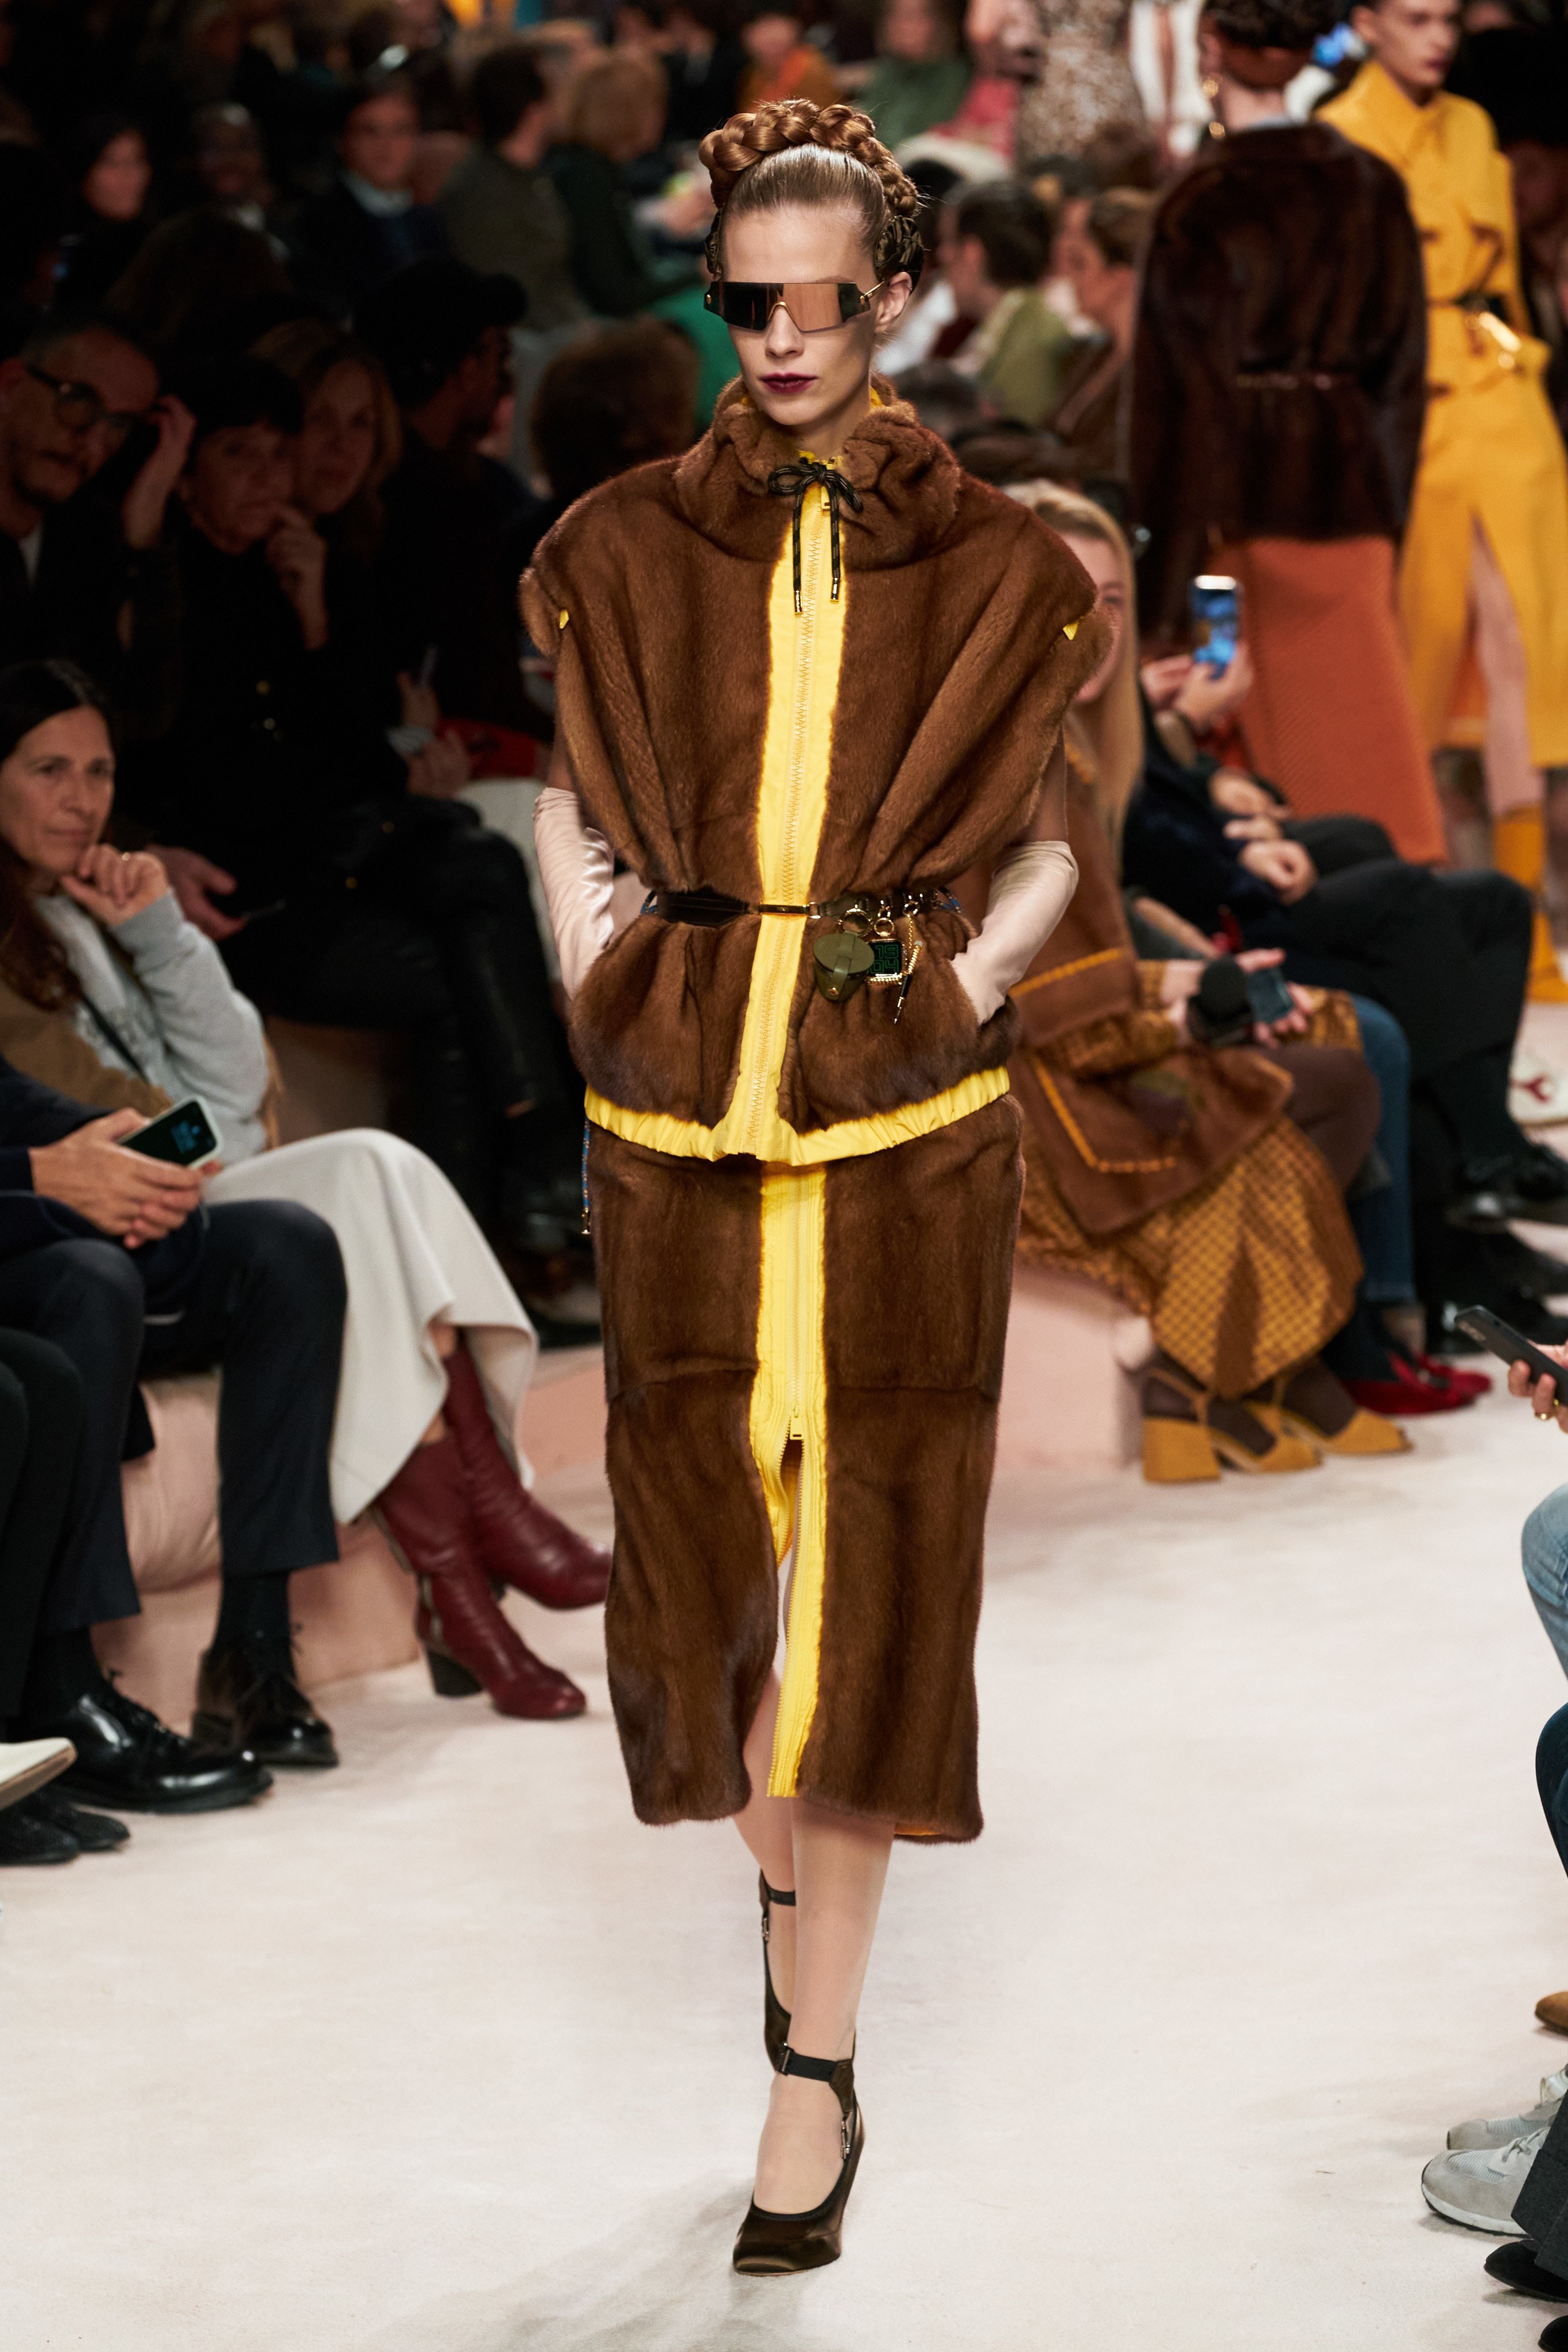 fendi fall 2020 ready to wear Milan fashion show